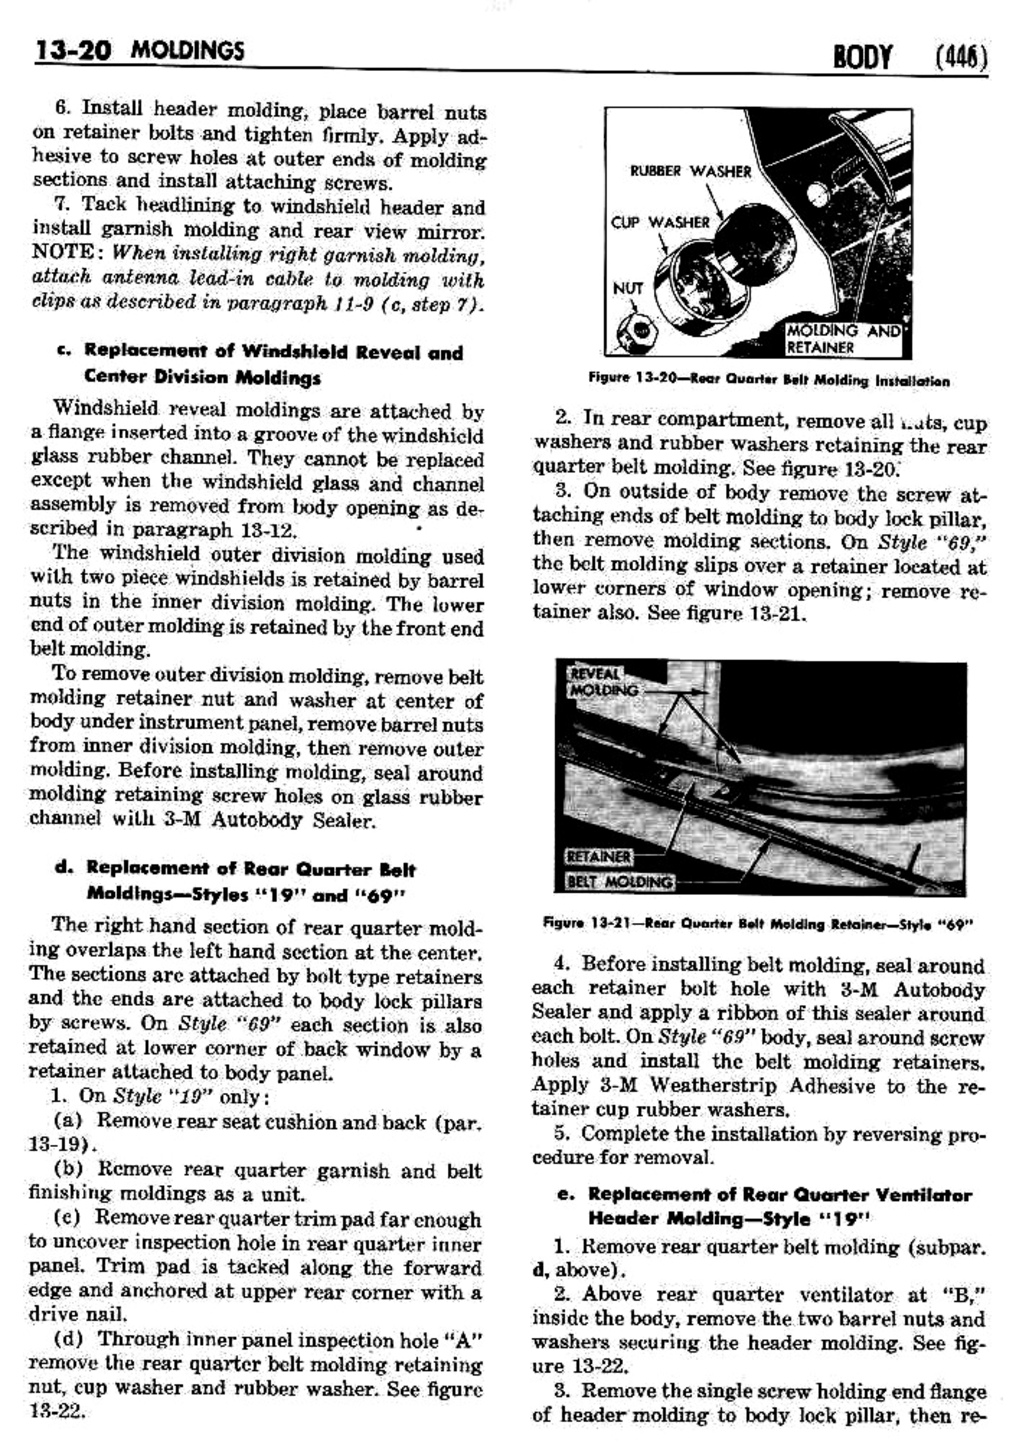 n_14 1951 Buick Shop Manual - Body-020-020.jpg